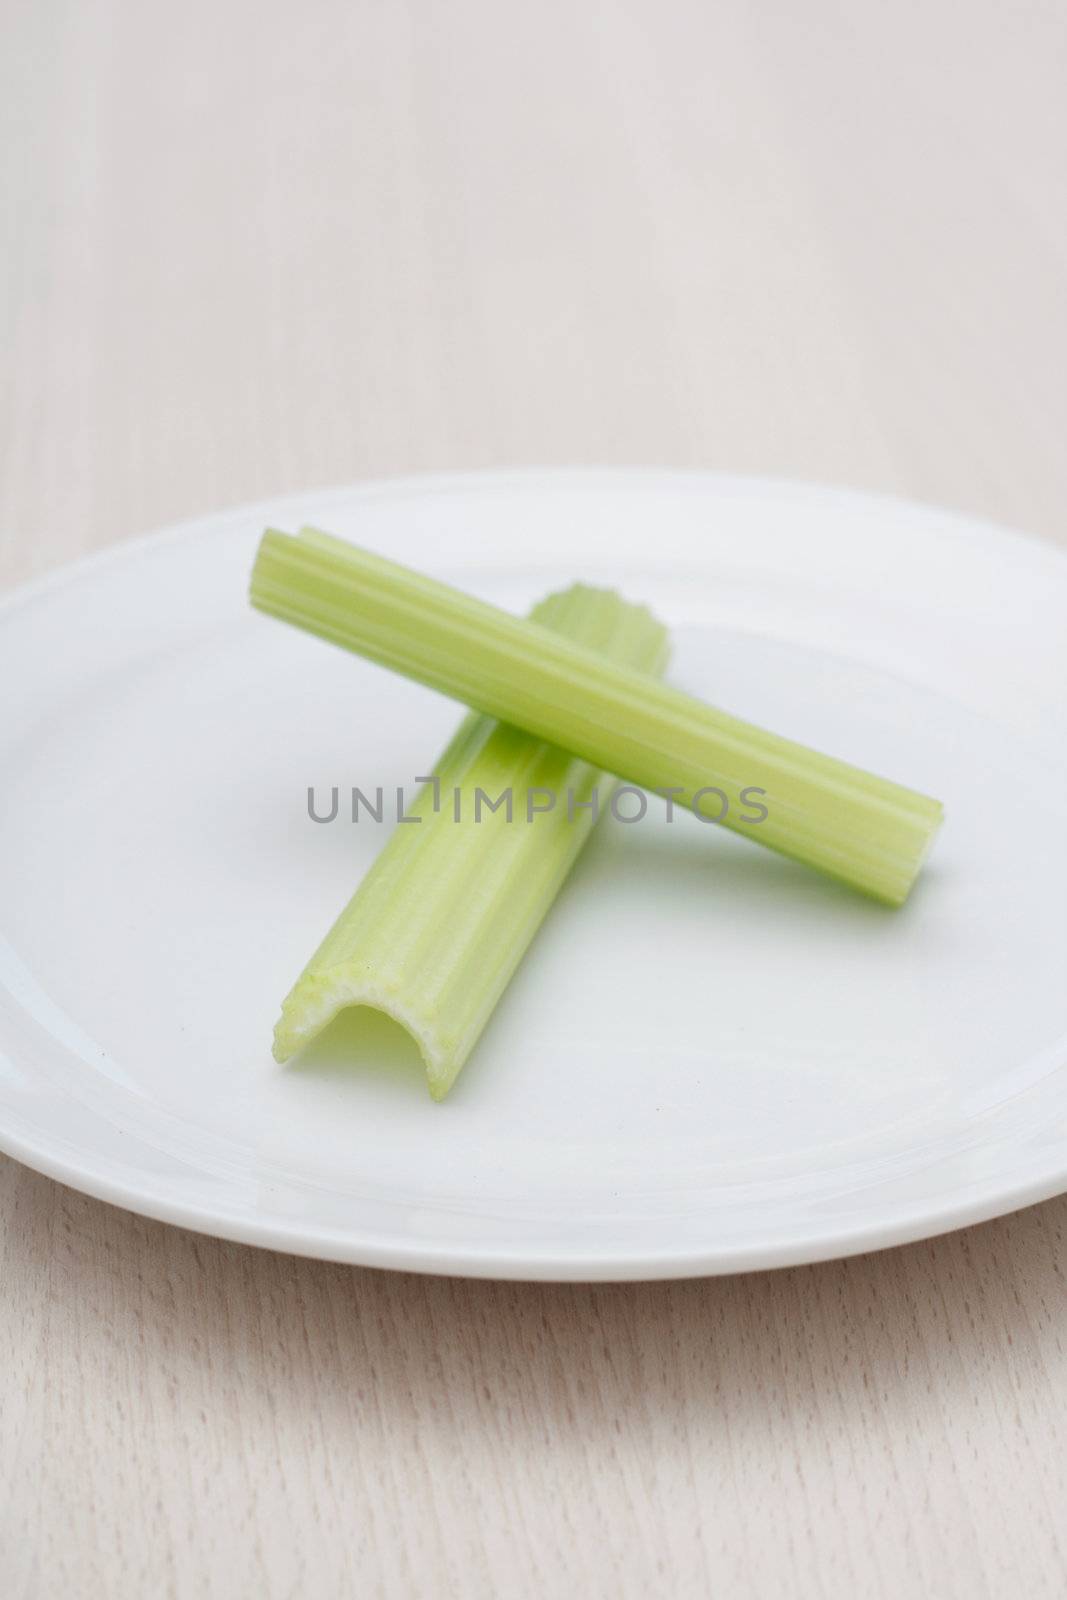 Celery sticks by leeser